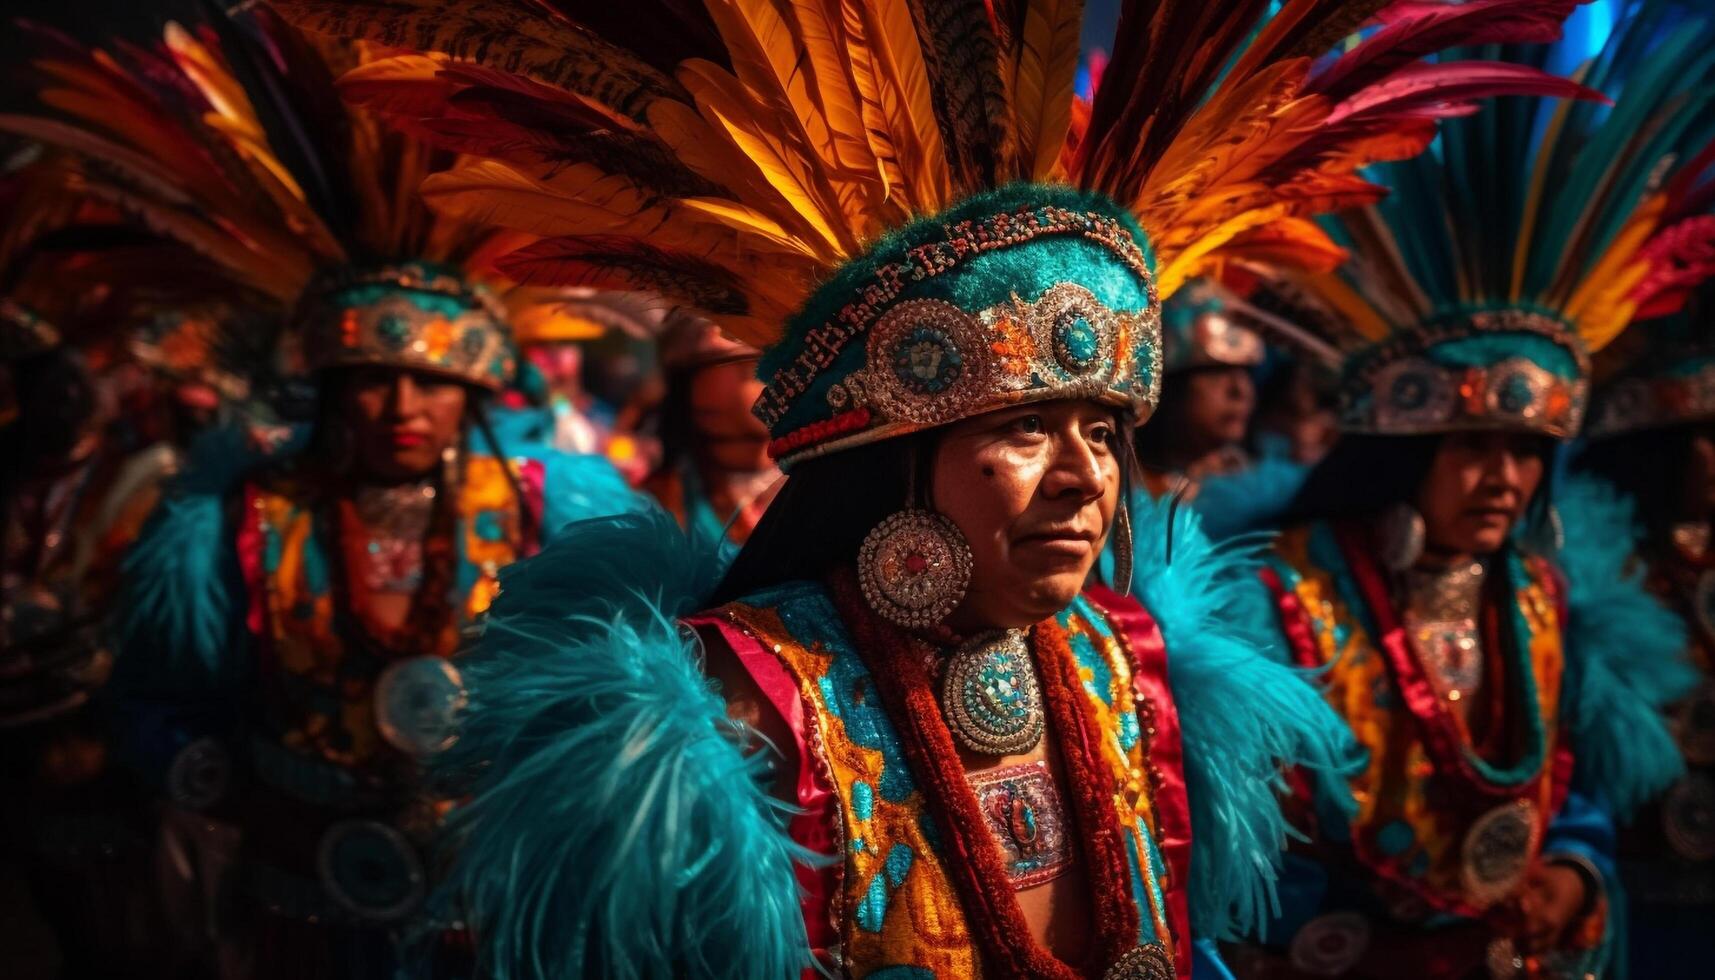 inheems mannen en Dames vieren traditioneel festival met multi gekleurde kleding, dansen en glimlachen gegenereerd door ai foto